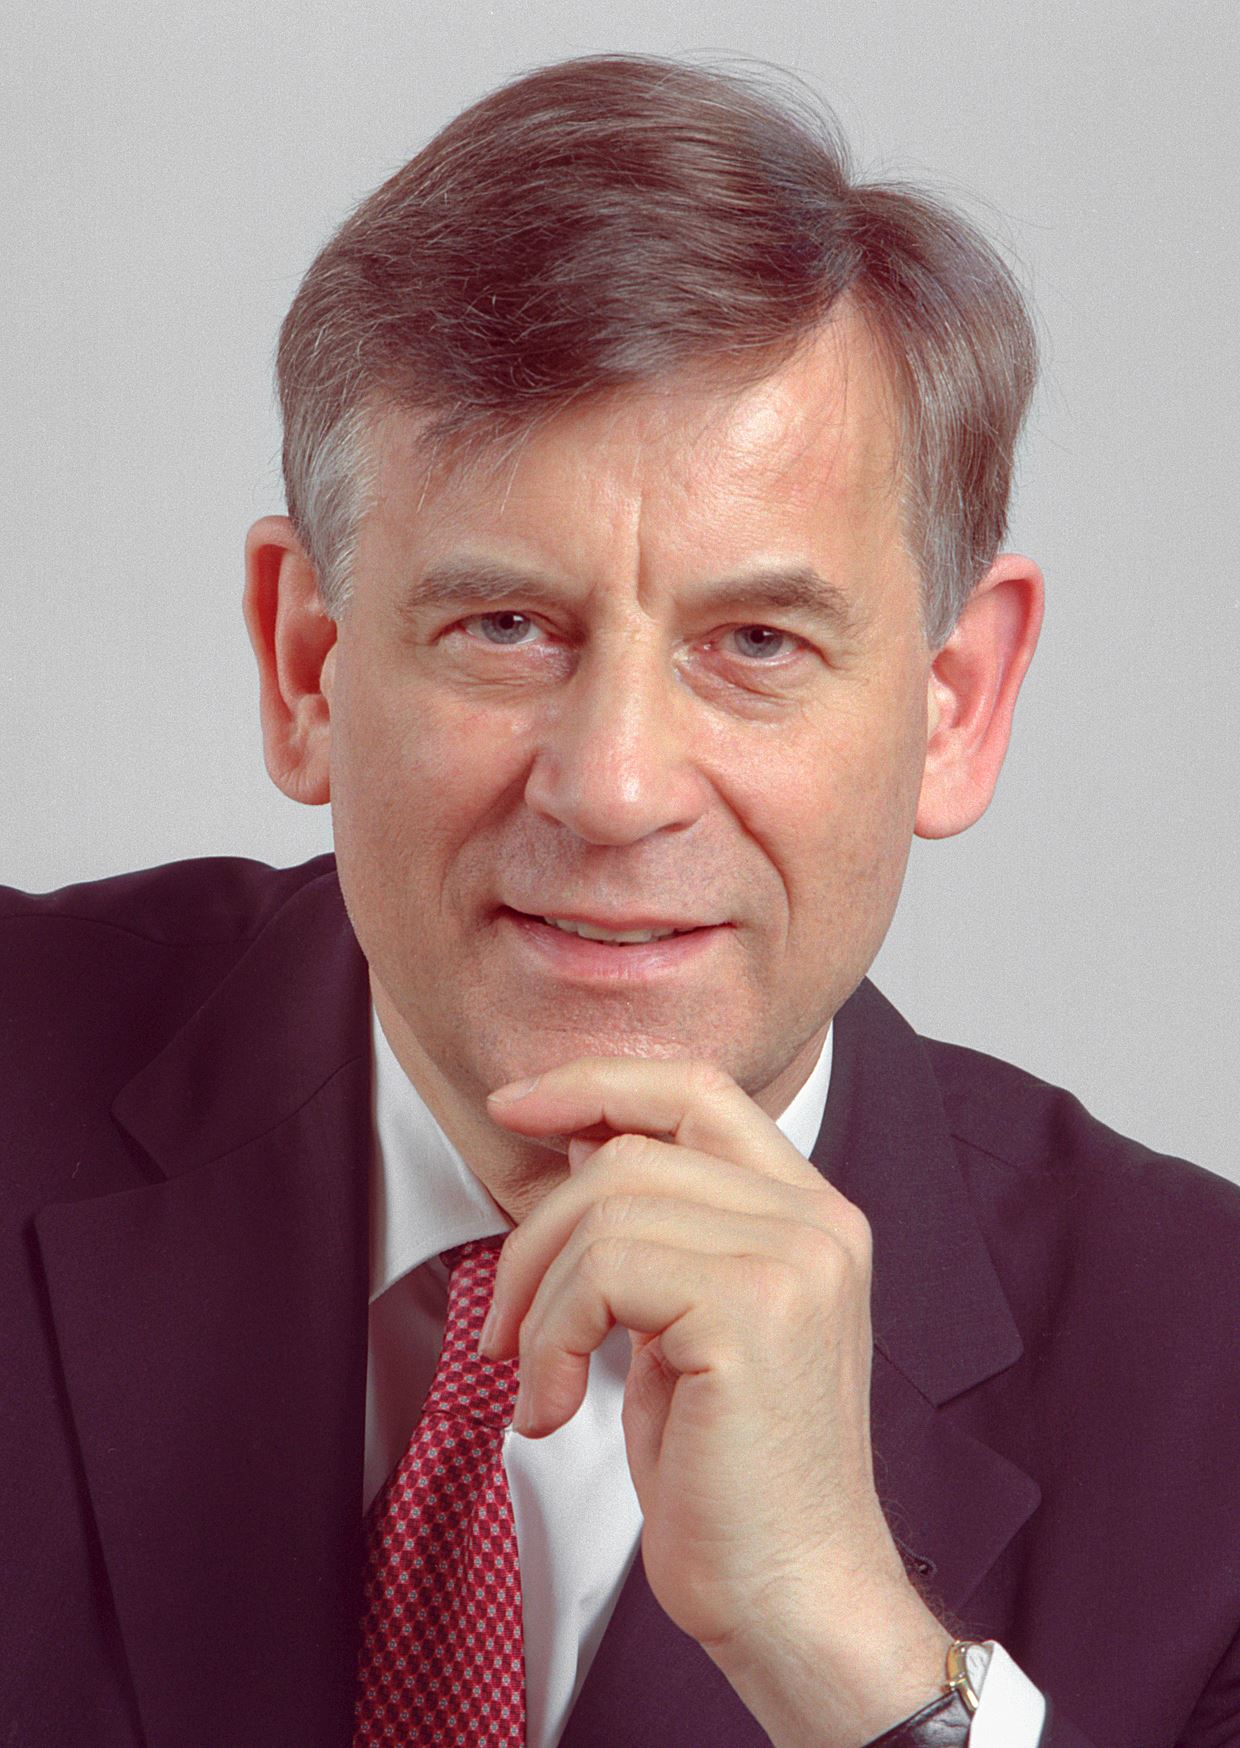 GS. Hermann Simon